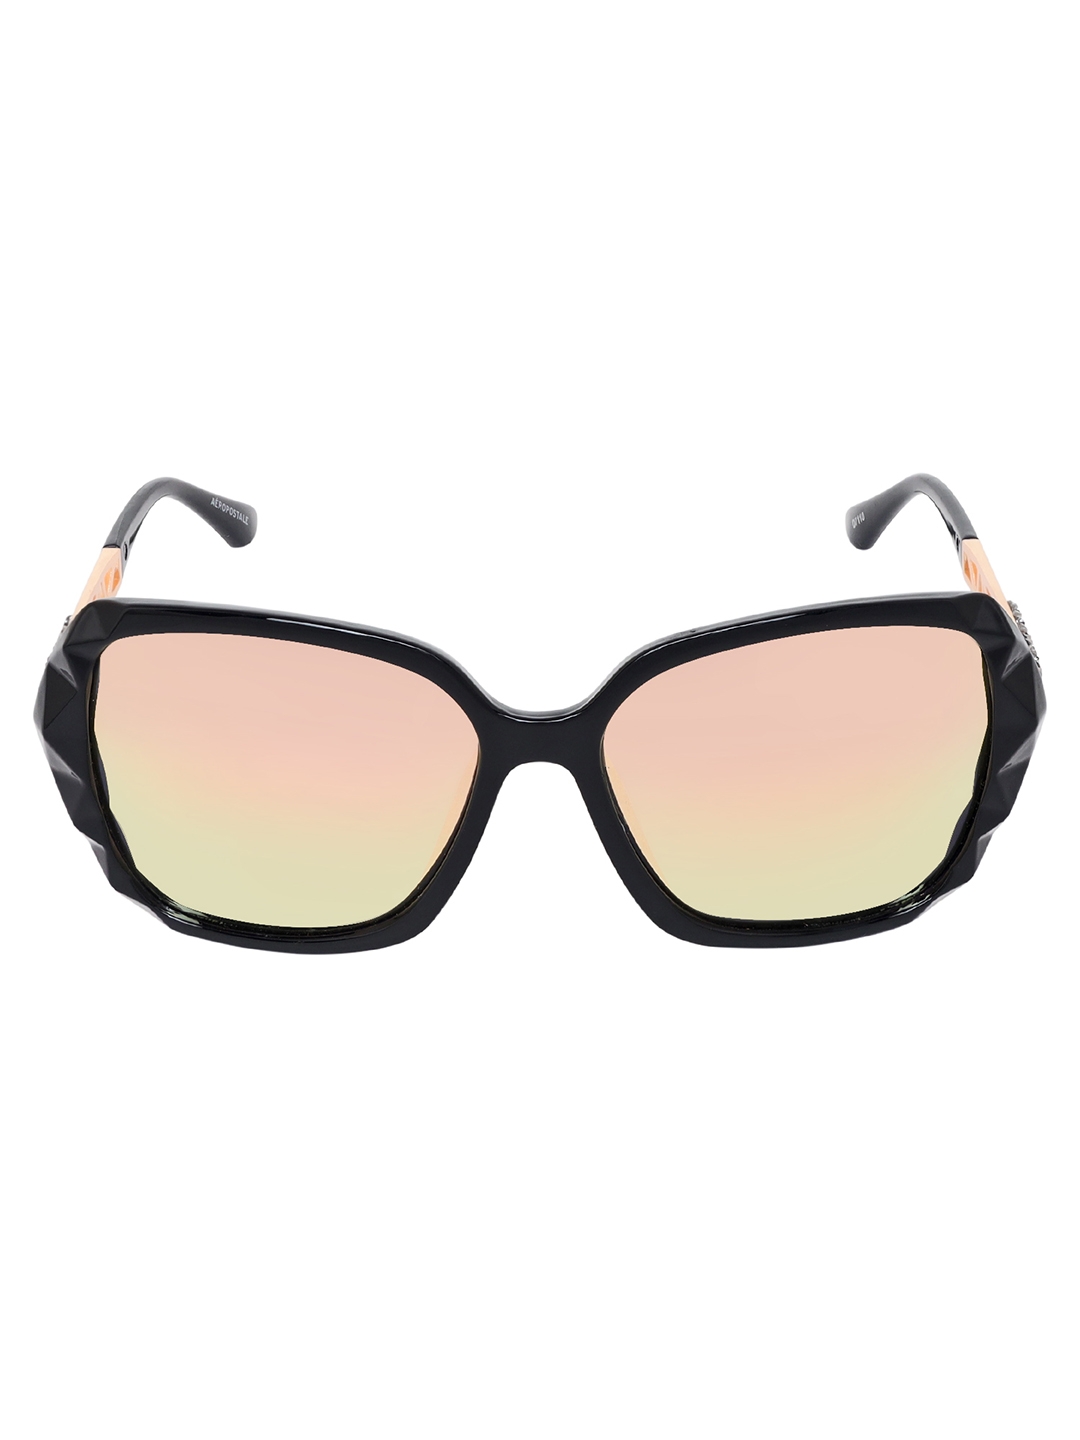 Aeropostale | Aeropostale AERO_SUN_2538_C5 Summer Sun Glasses with UV protection Polarized Anti Glare Summer Style Golden Reflective Lenses with Black wide Acrylic Frame 0